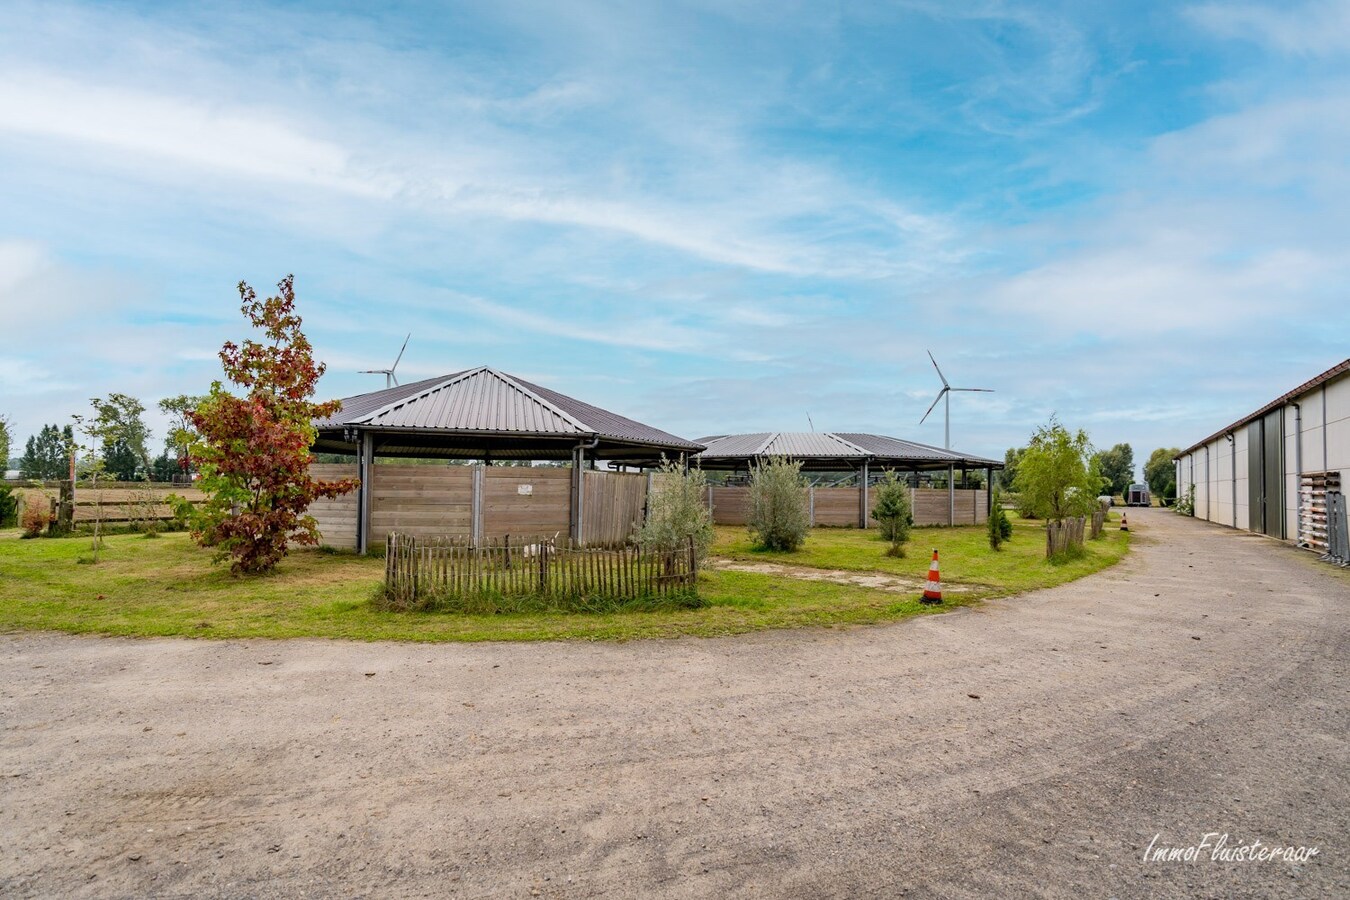 Property sold | under restrictions in Beveren